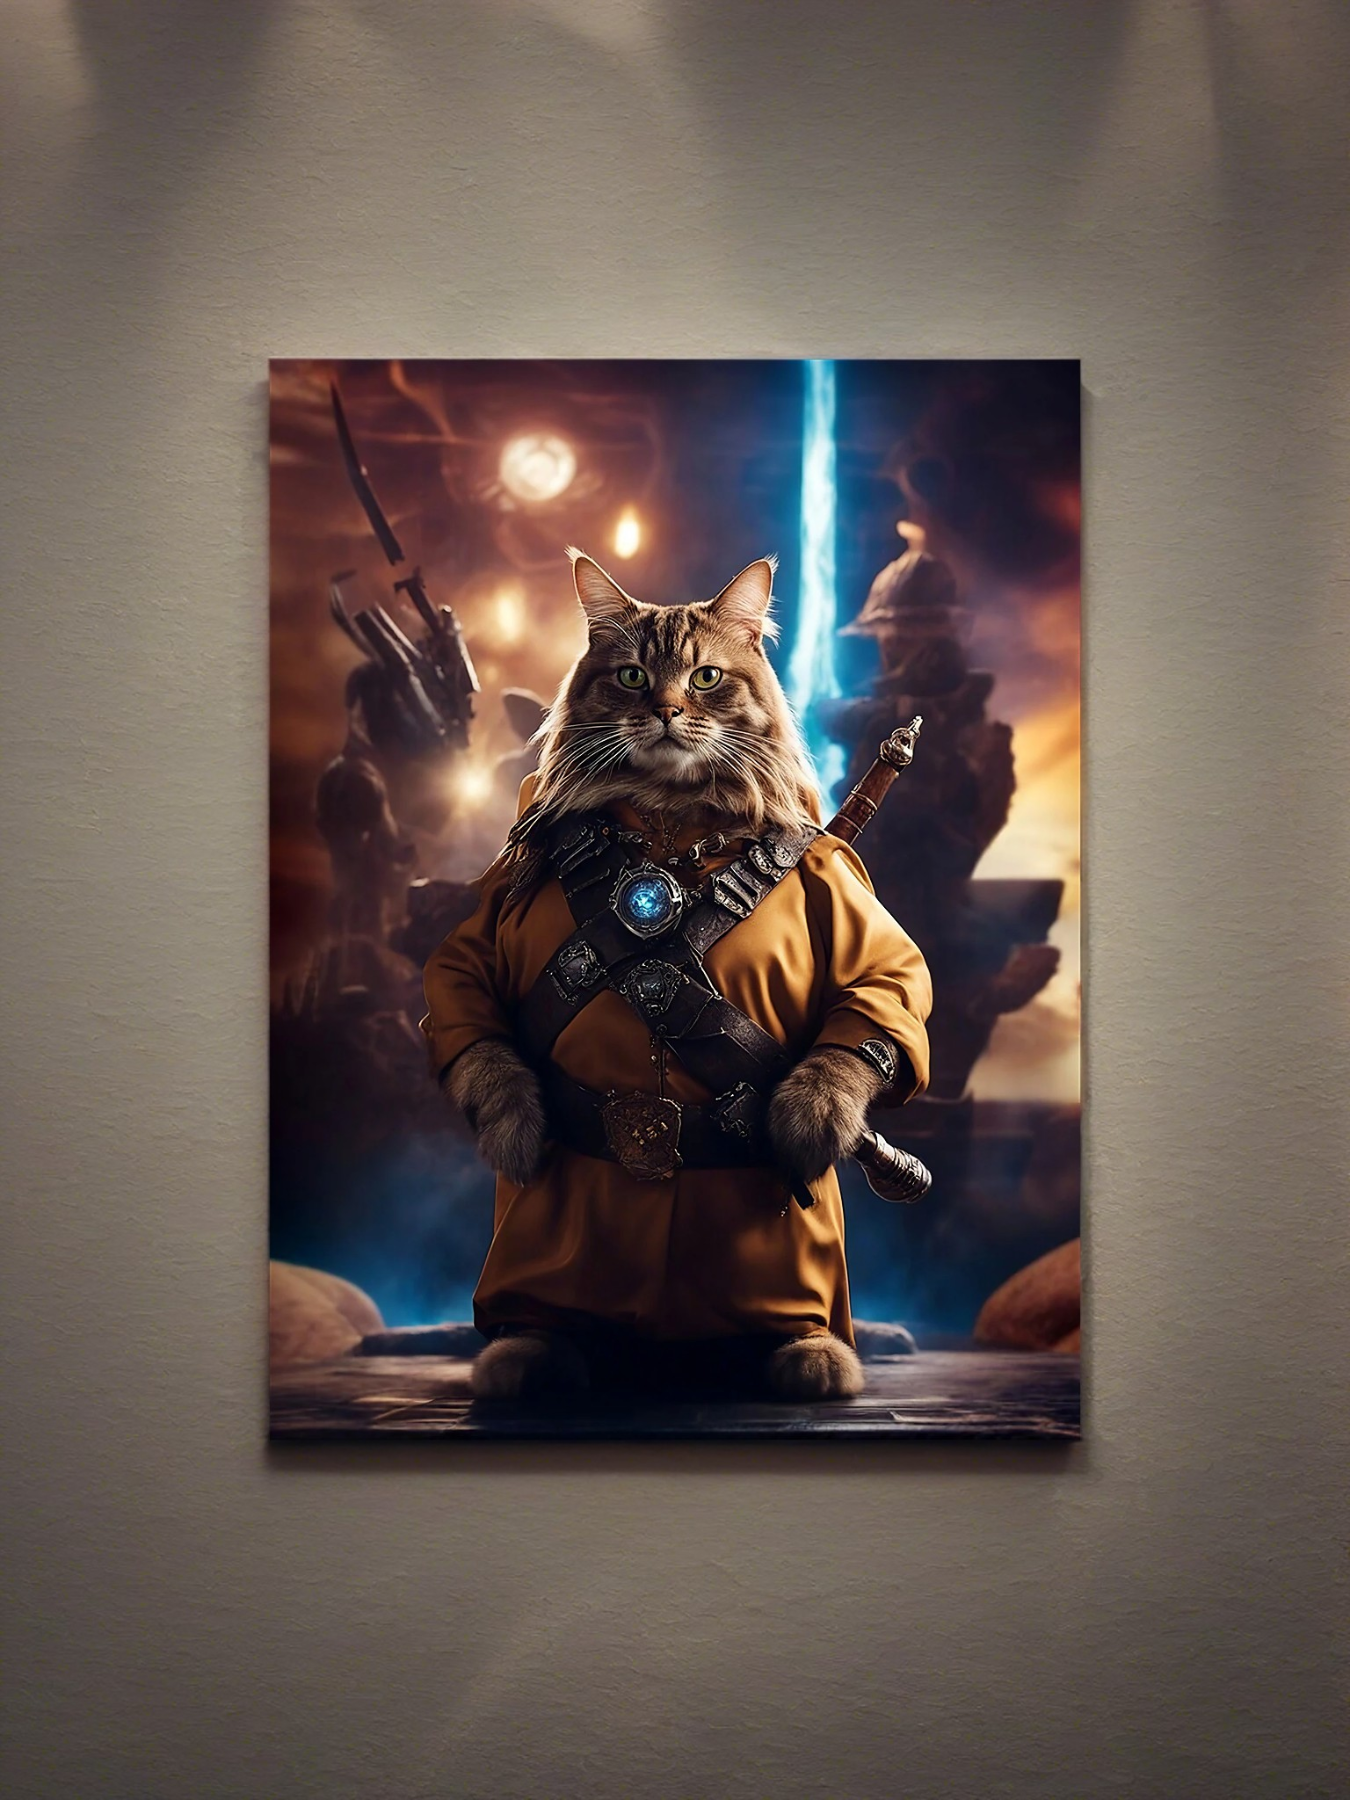 Hero cat science fiction mini photo poster - 27x20 cm 2